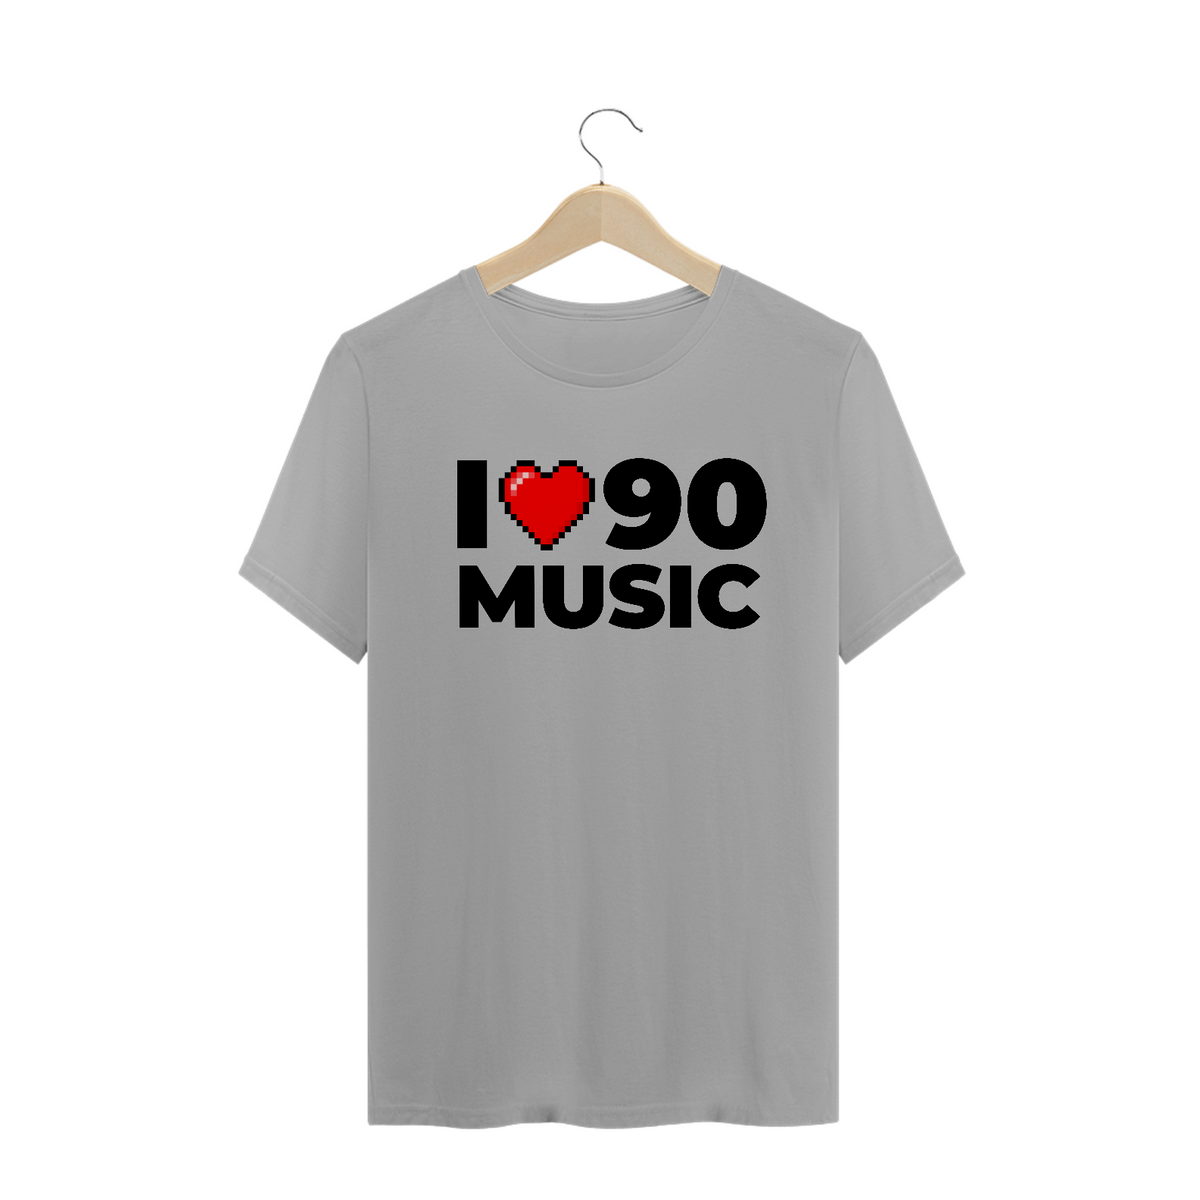 Nome do produto: i love 90 music